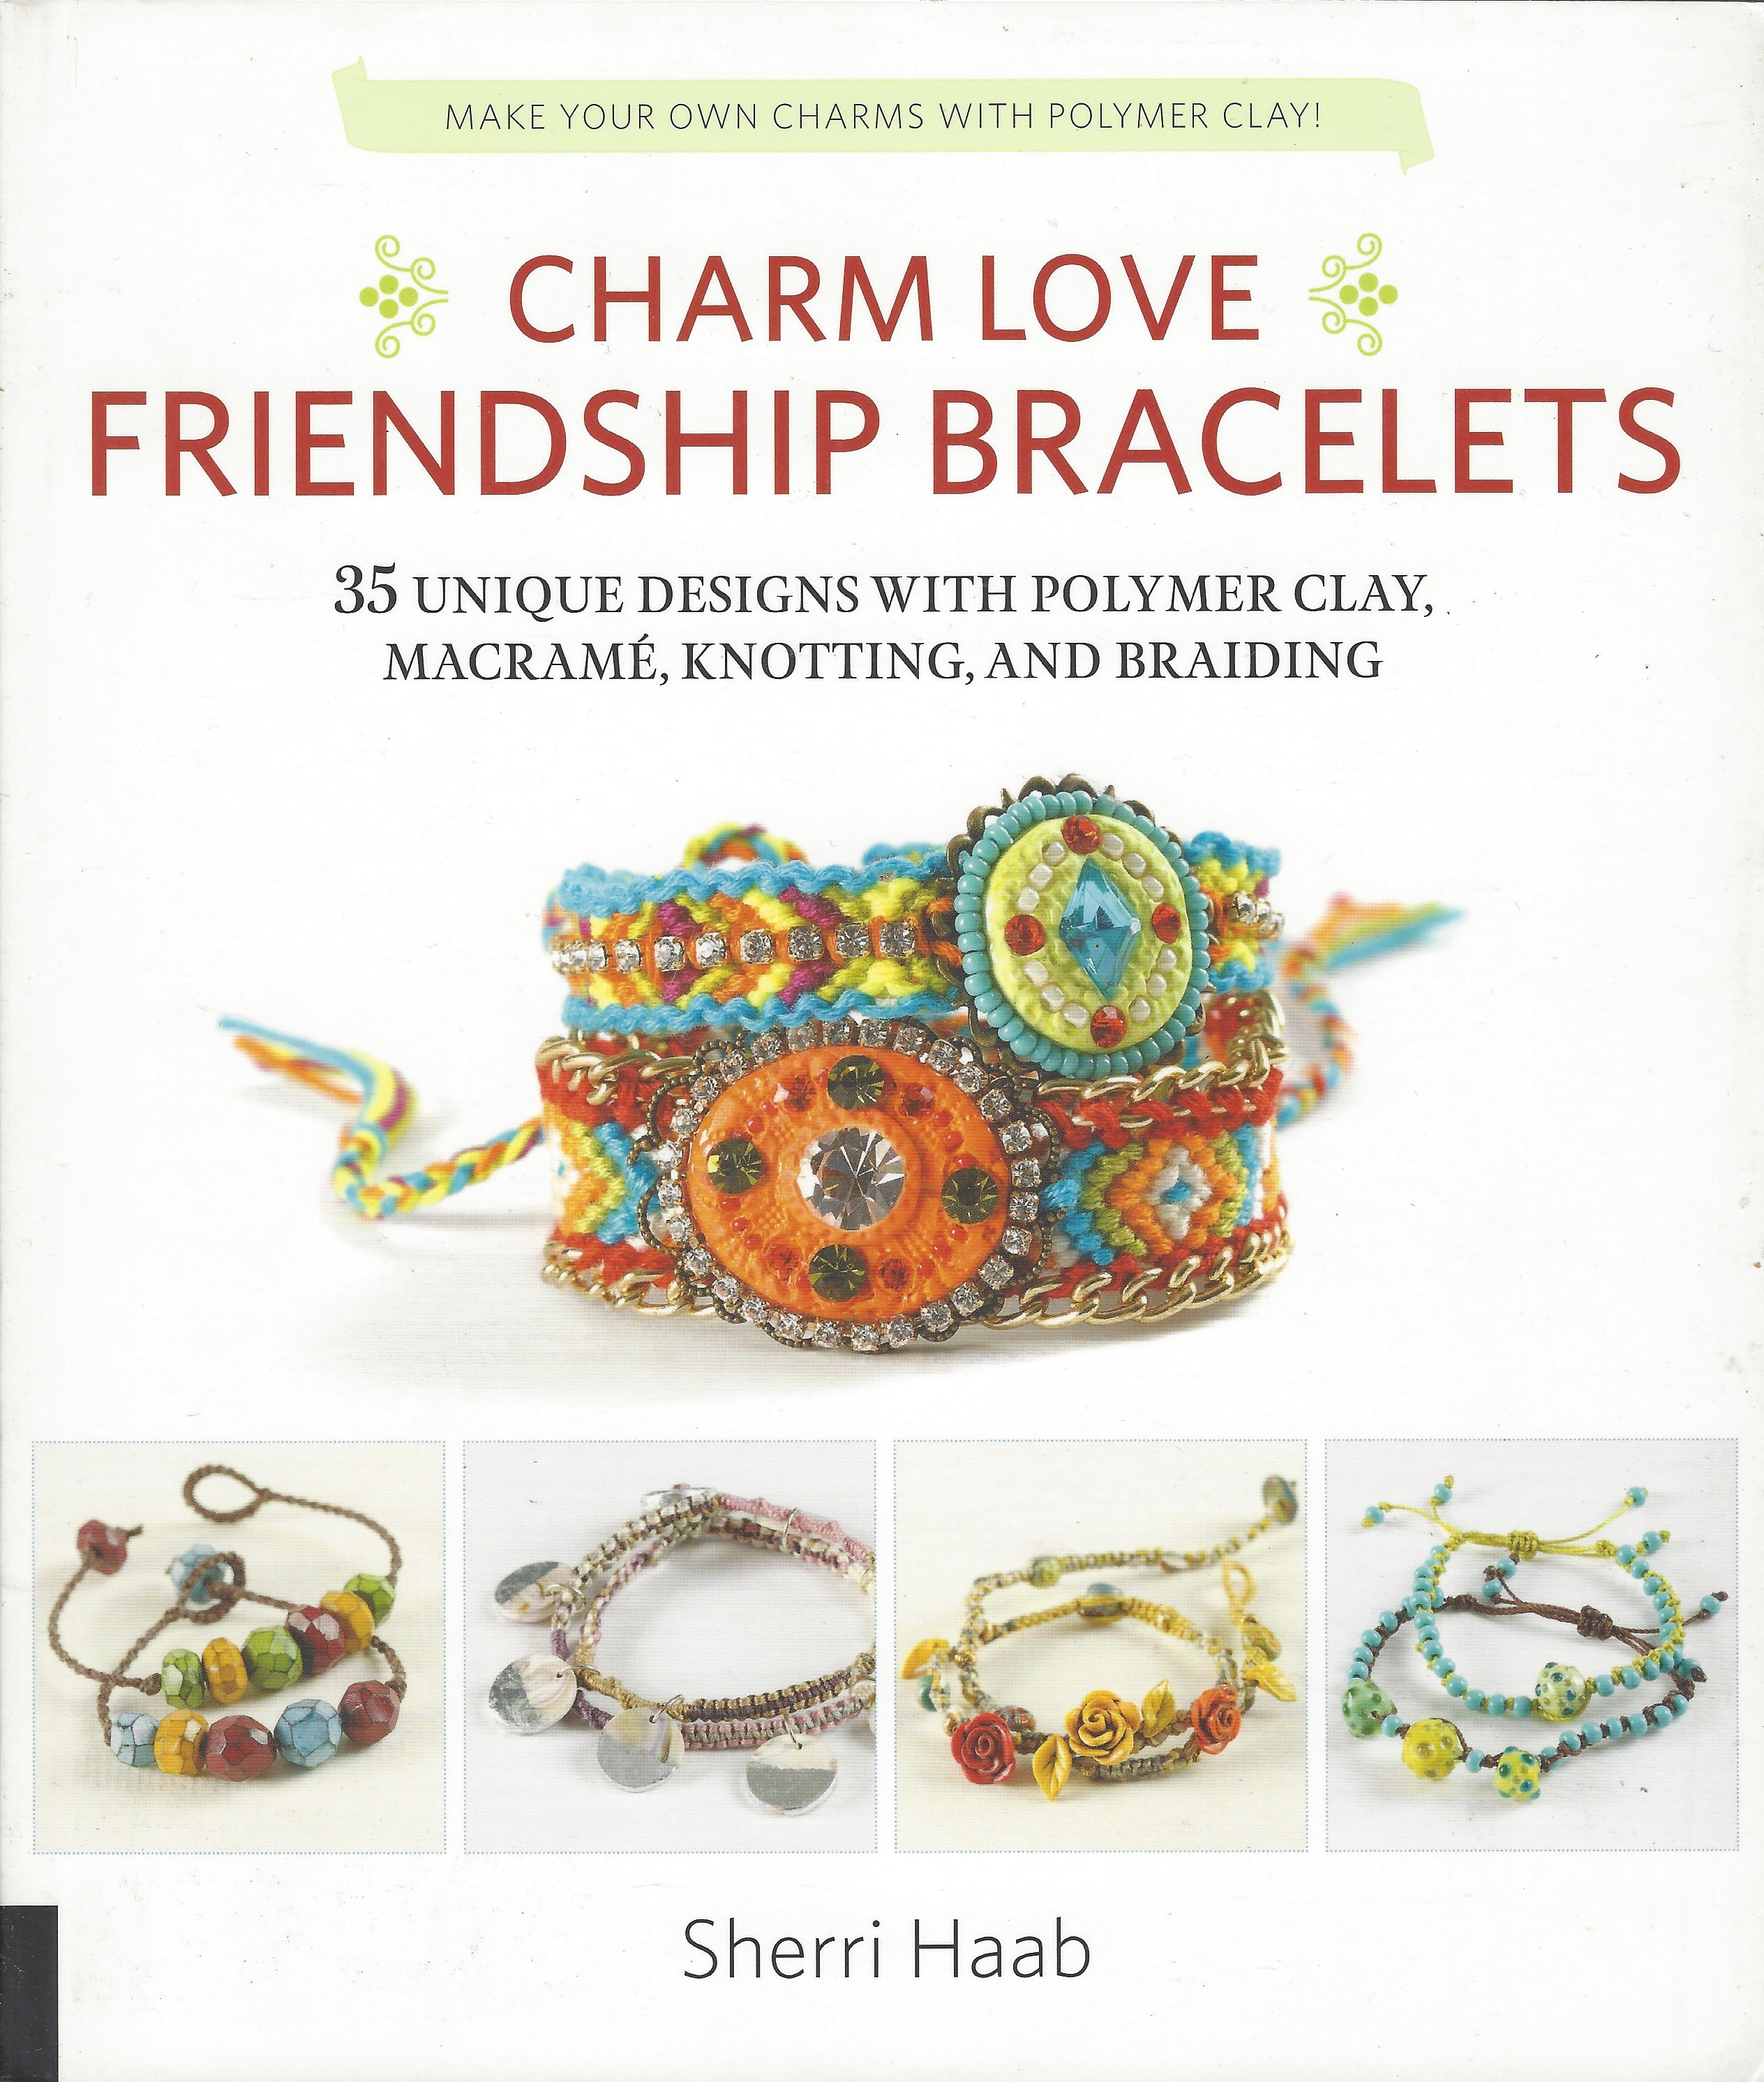 Charm Bracelet: Friendship